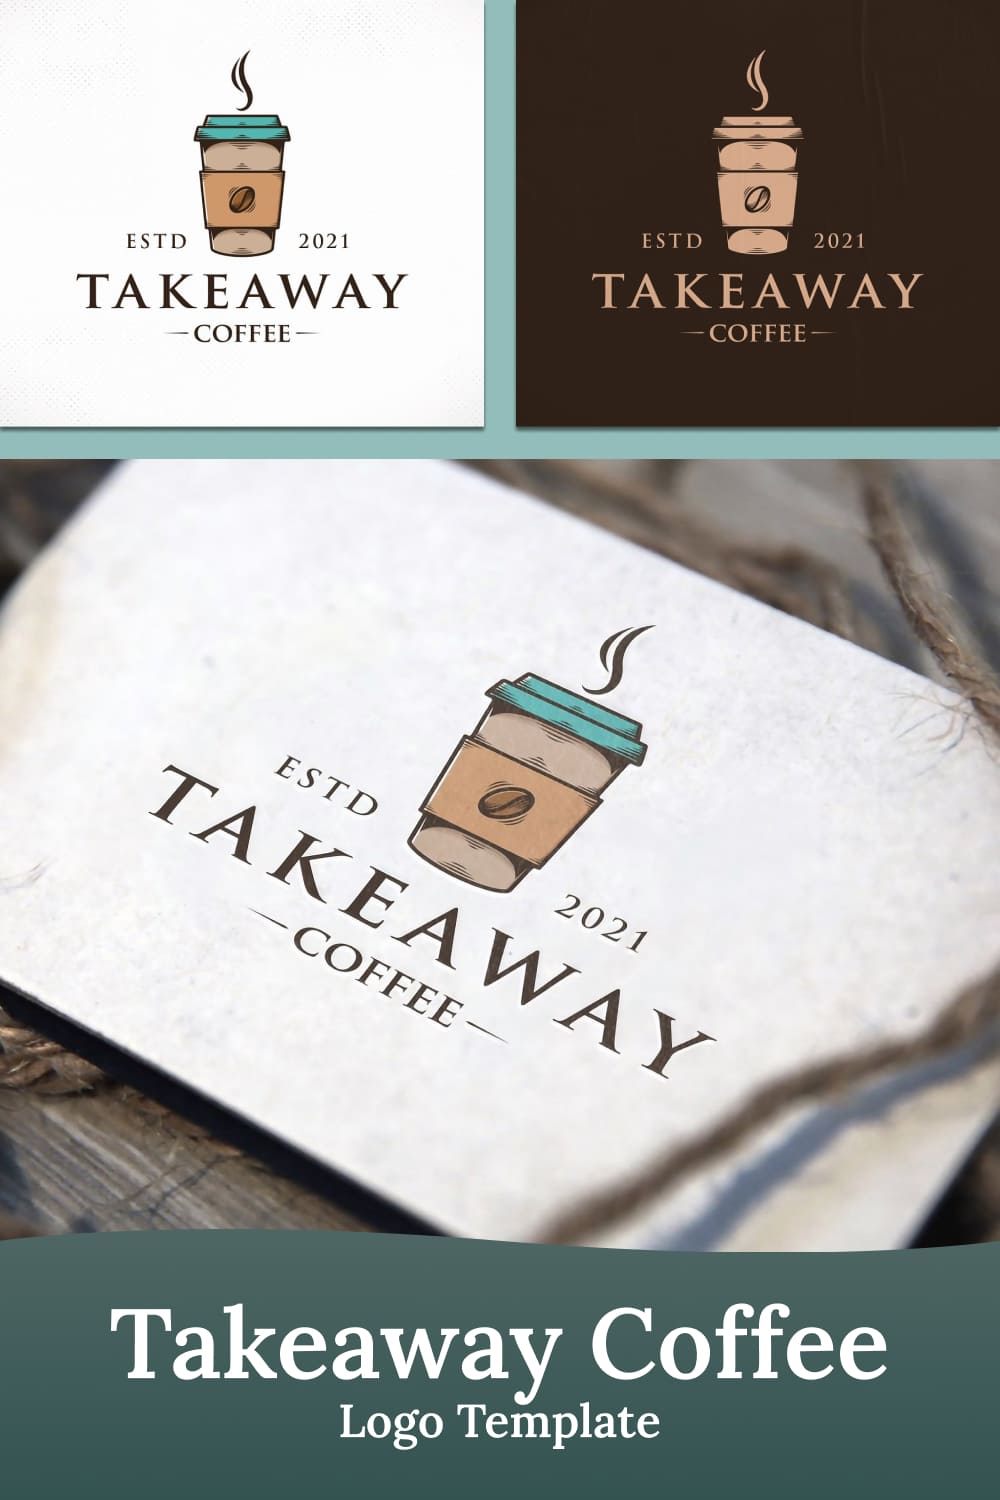 Takeaway coffee logo template - pinterest image preview.